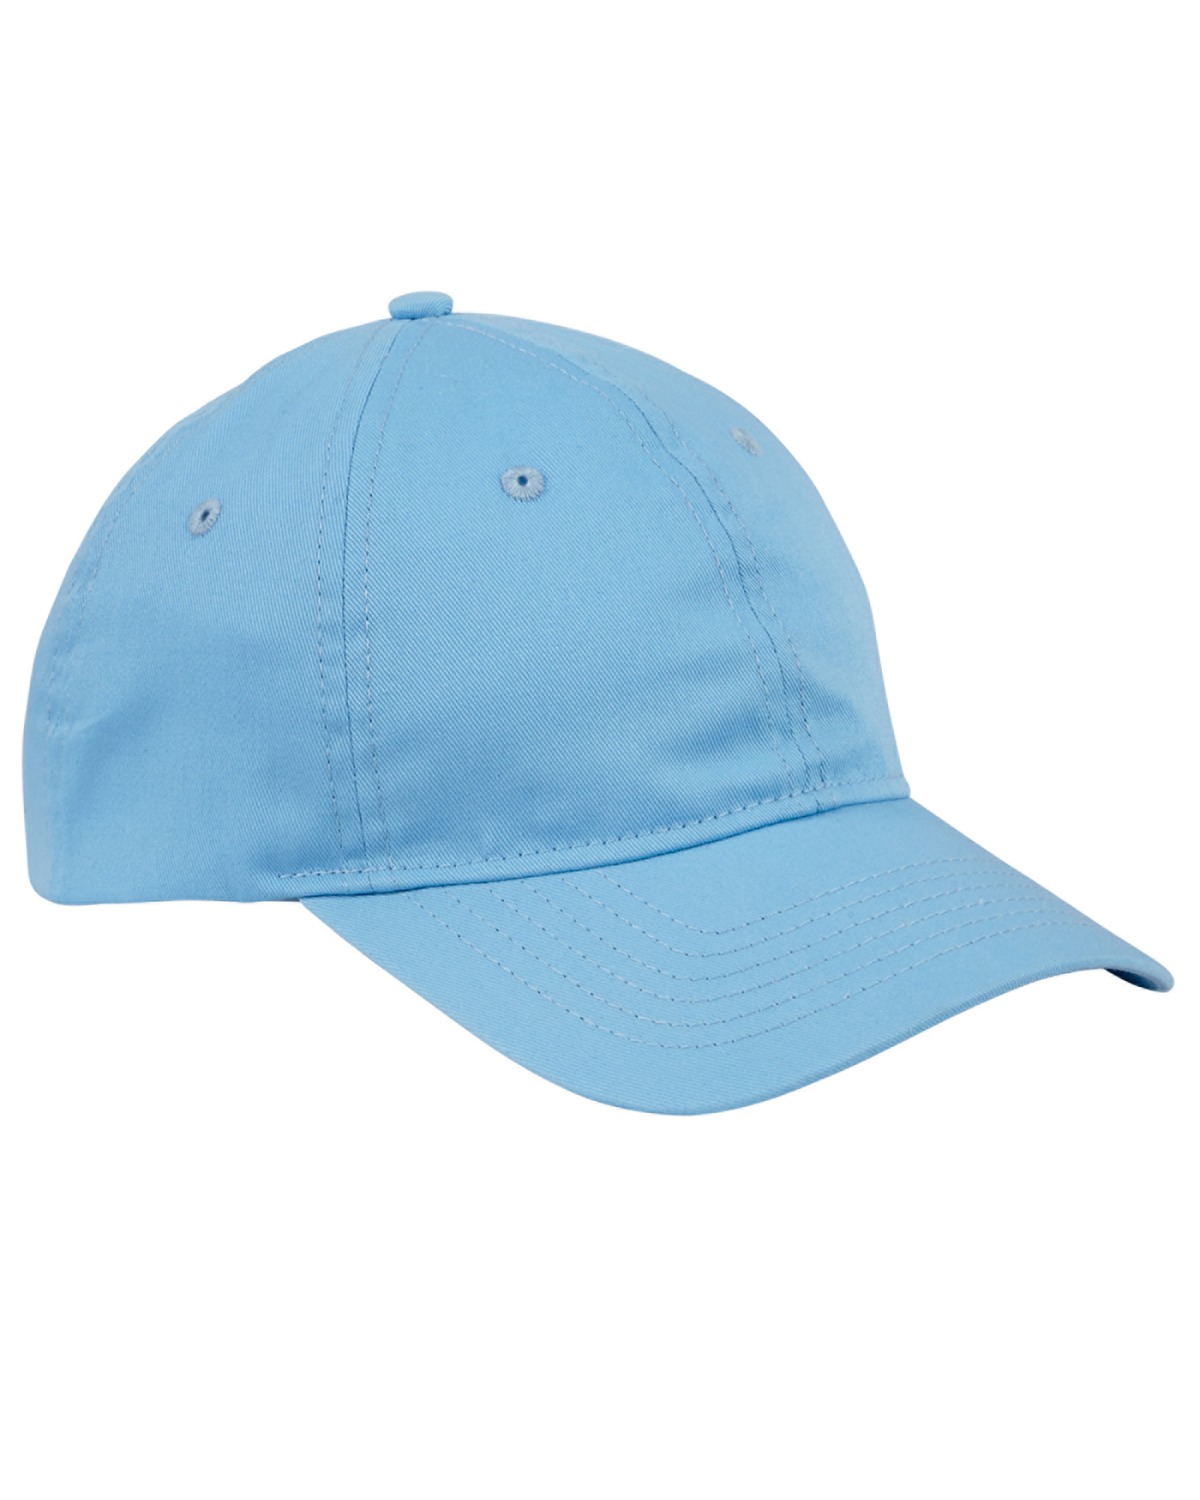 Dark Grey Plain Baseball Hat - Low Profile - Constructed - Adjustable Velcro Back - 100% Acrylic (Wool Feel)